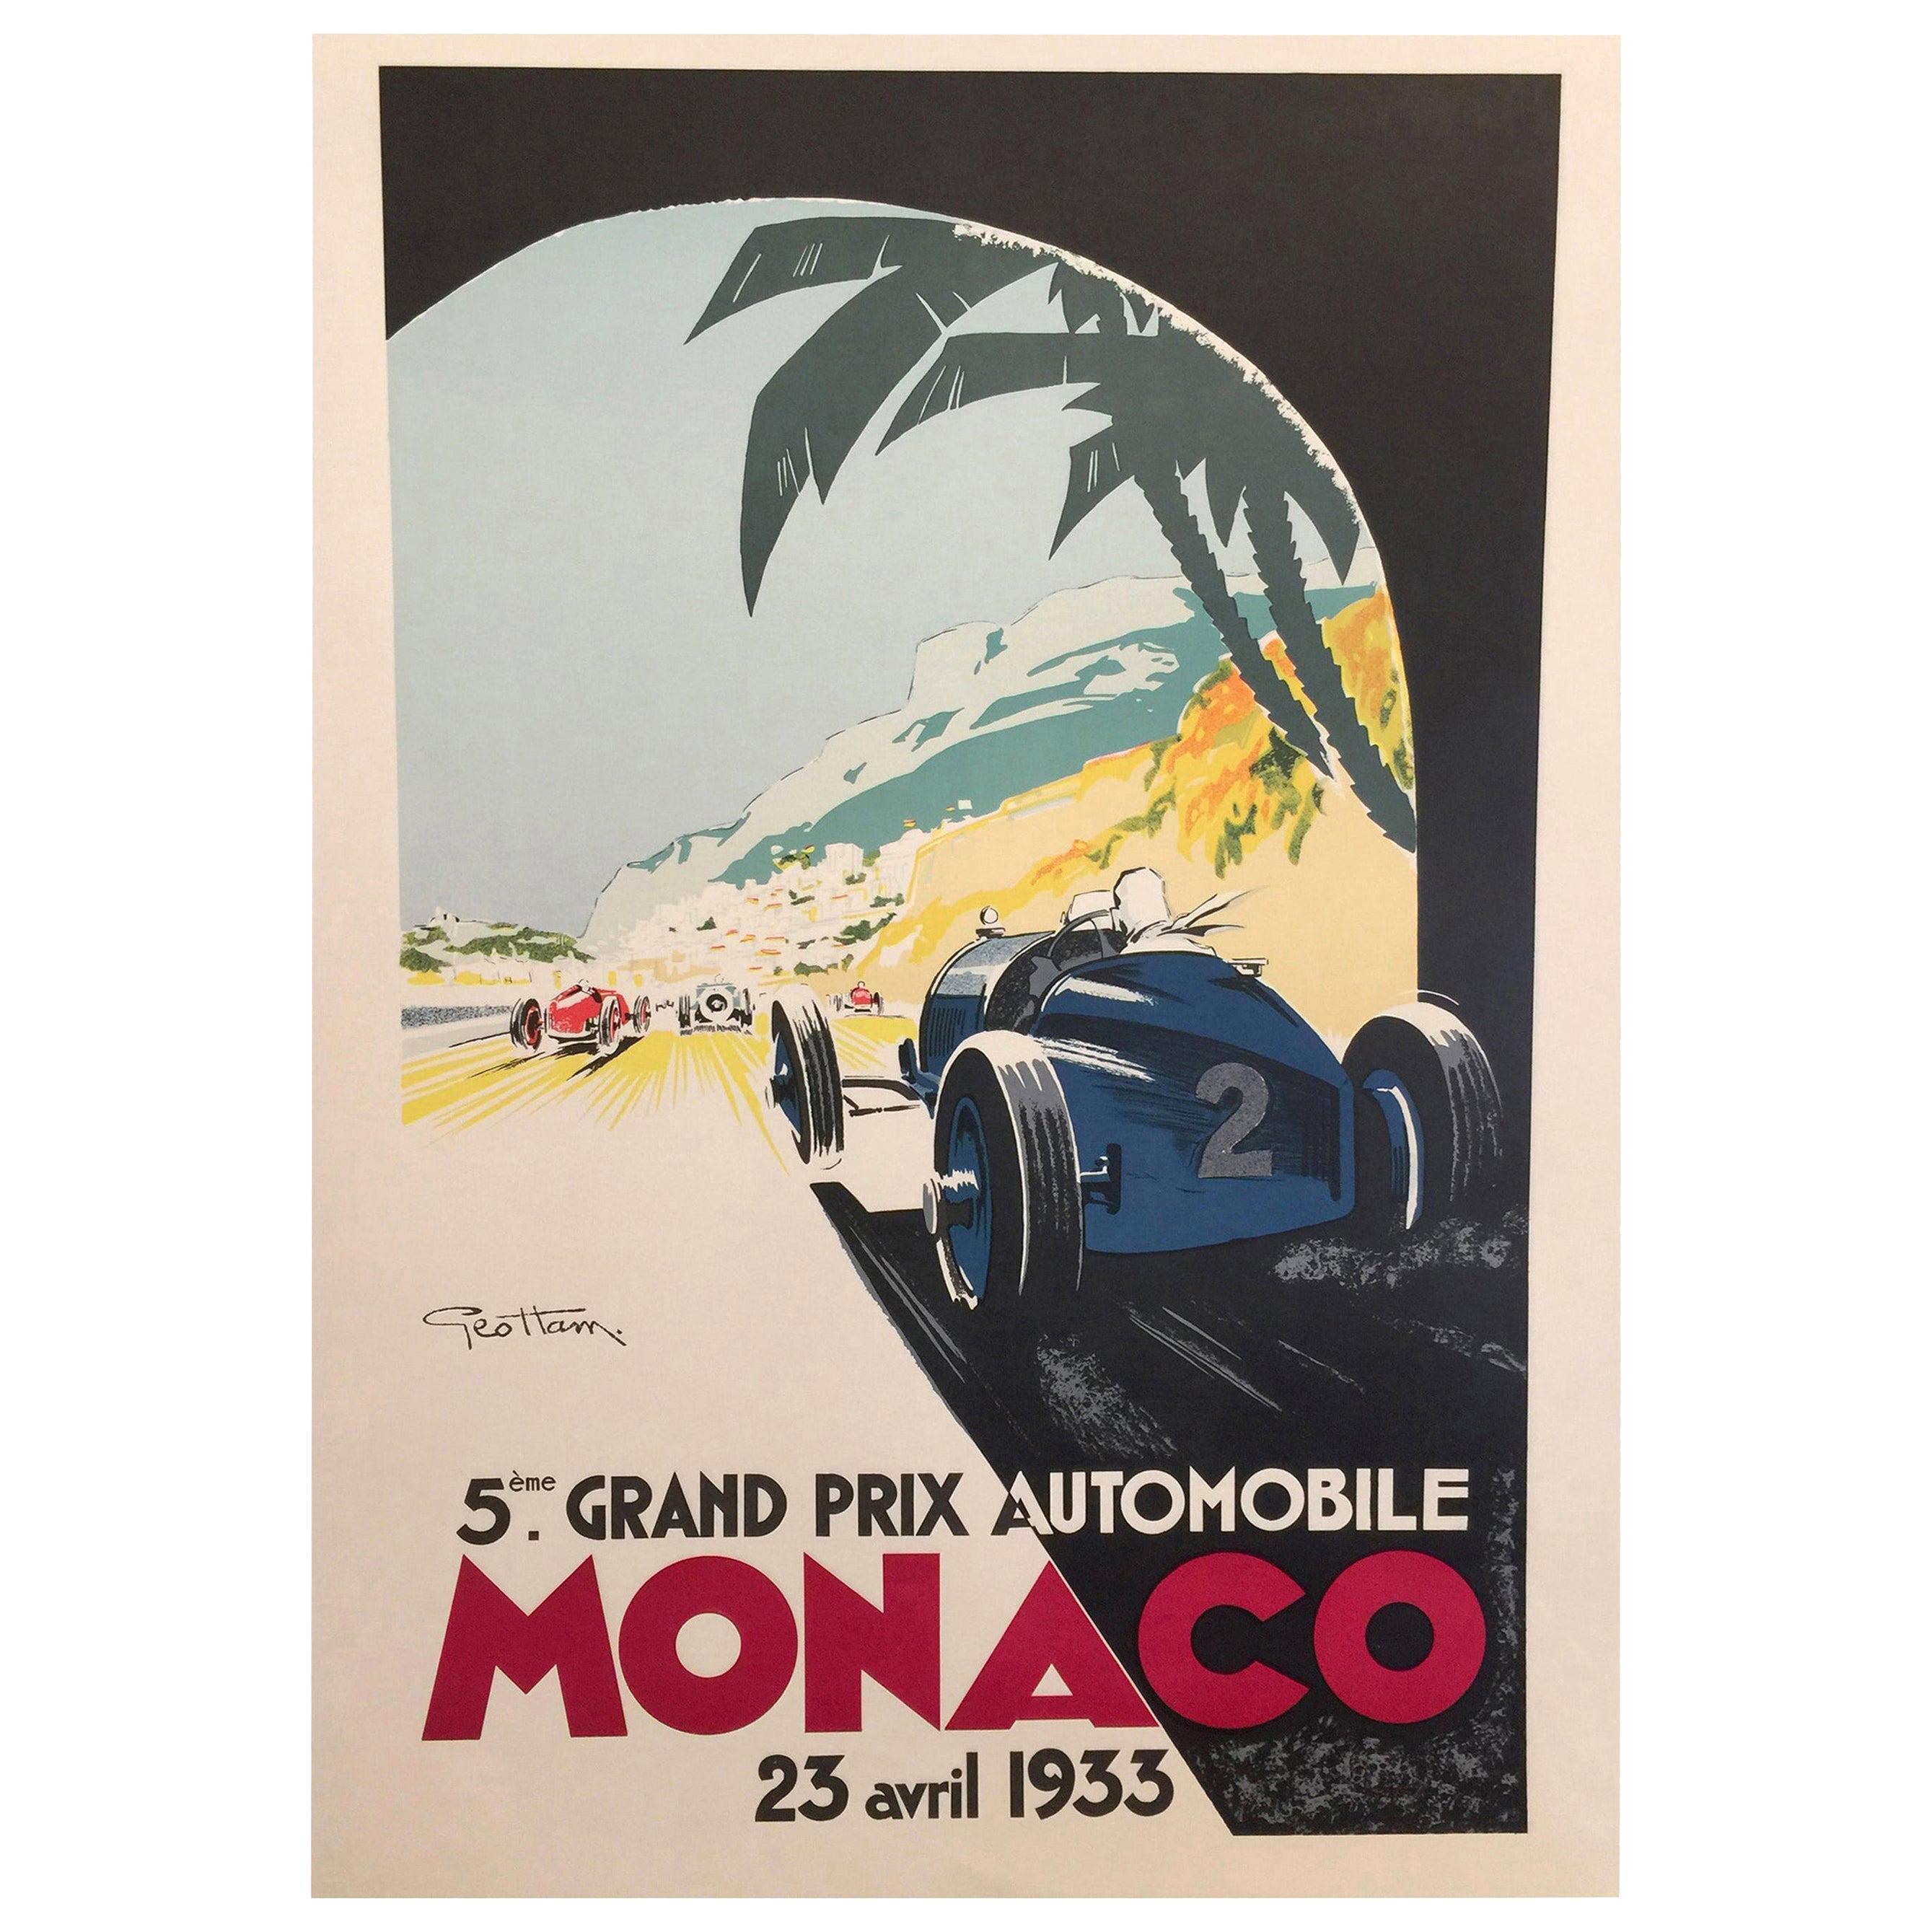 Authorized Edition Vintage "Monaco Grand Prix Car" Poster by Geo Ham, 1933